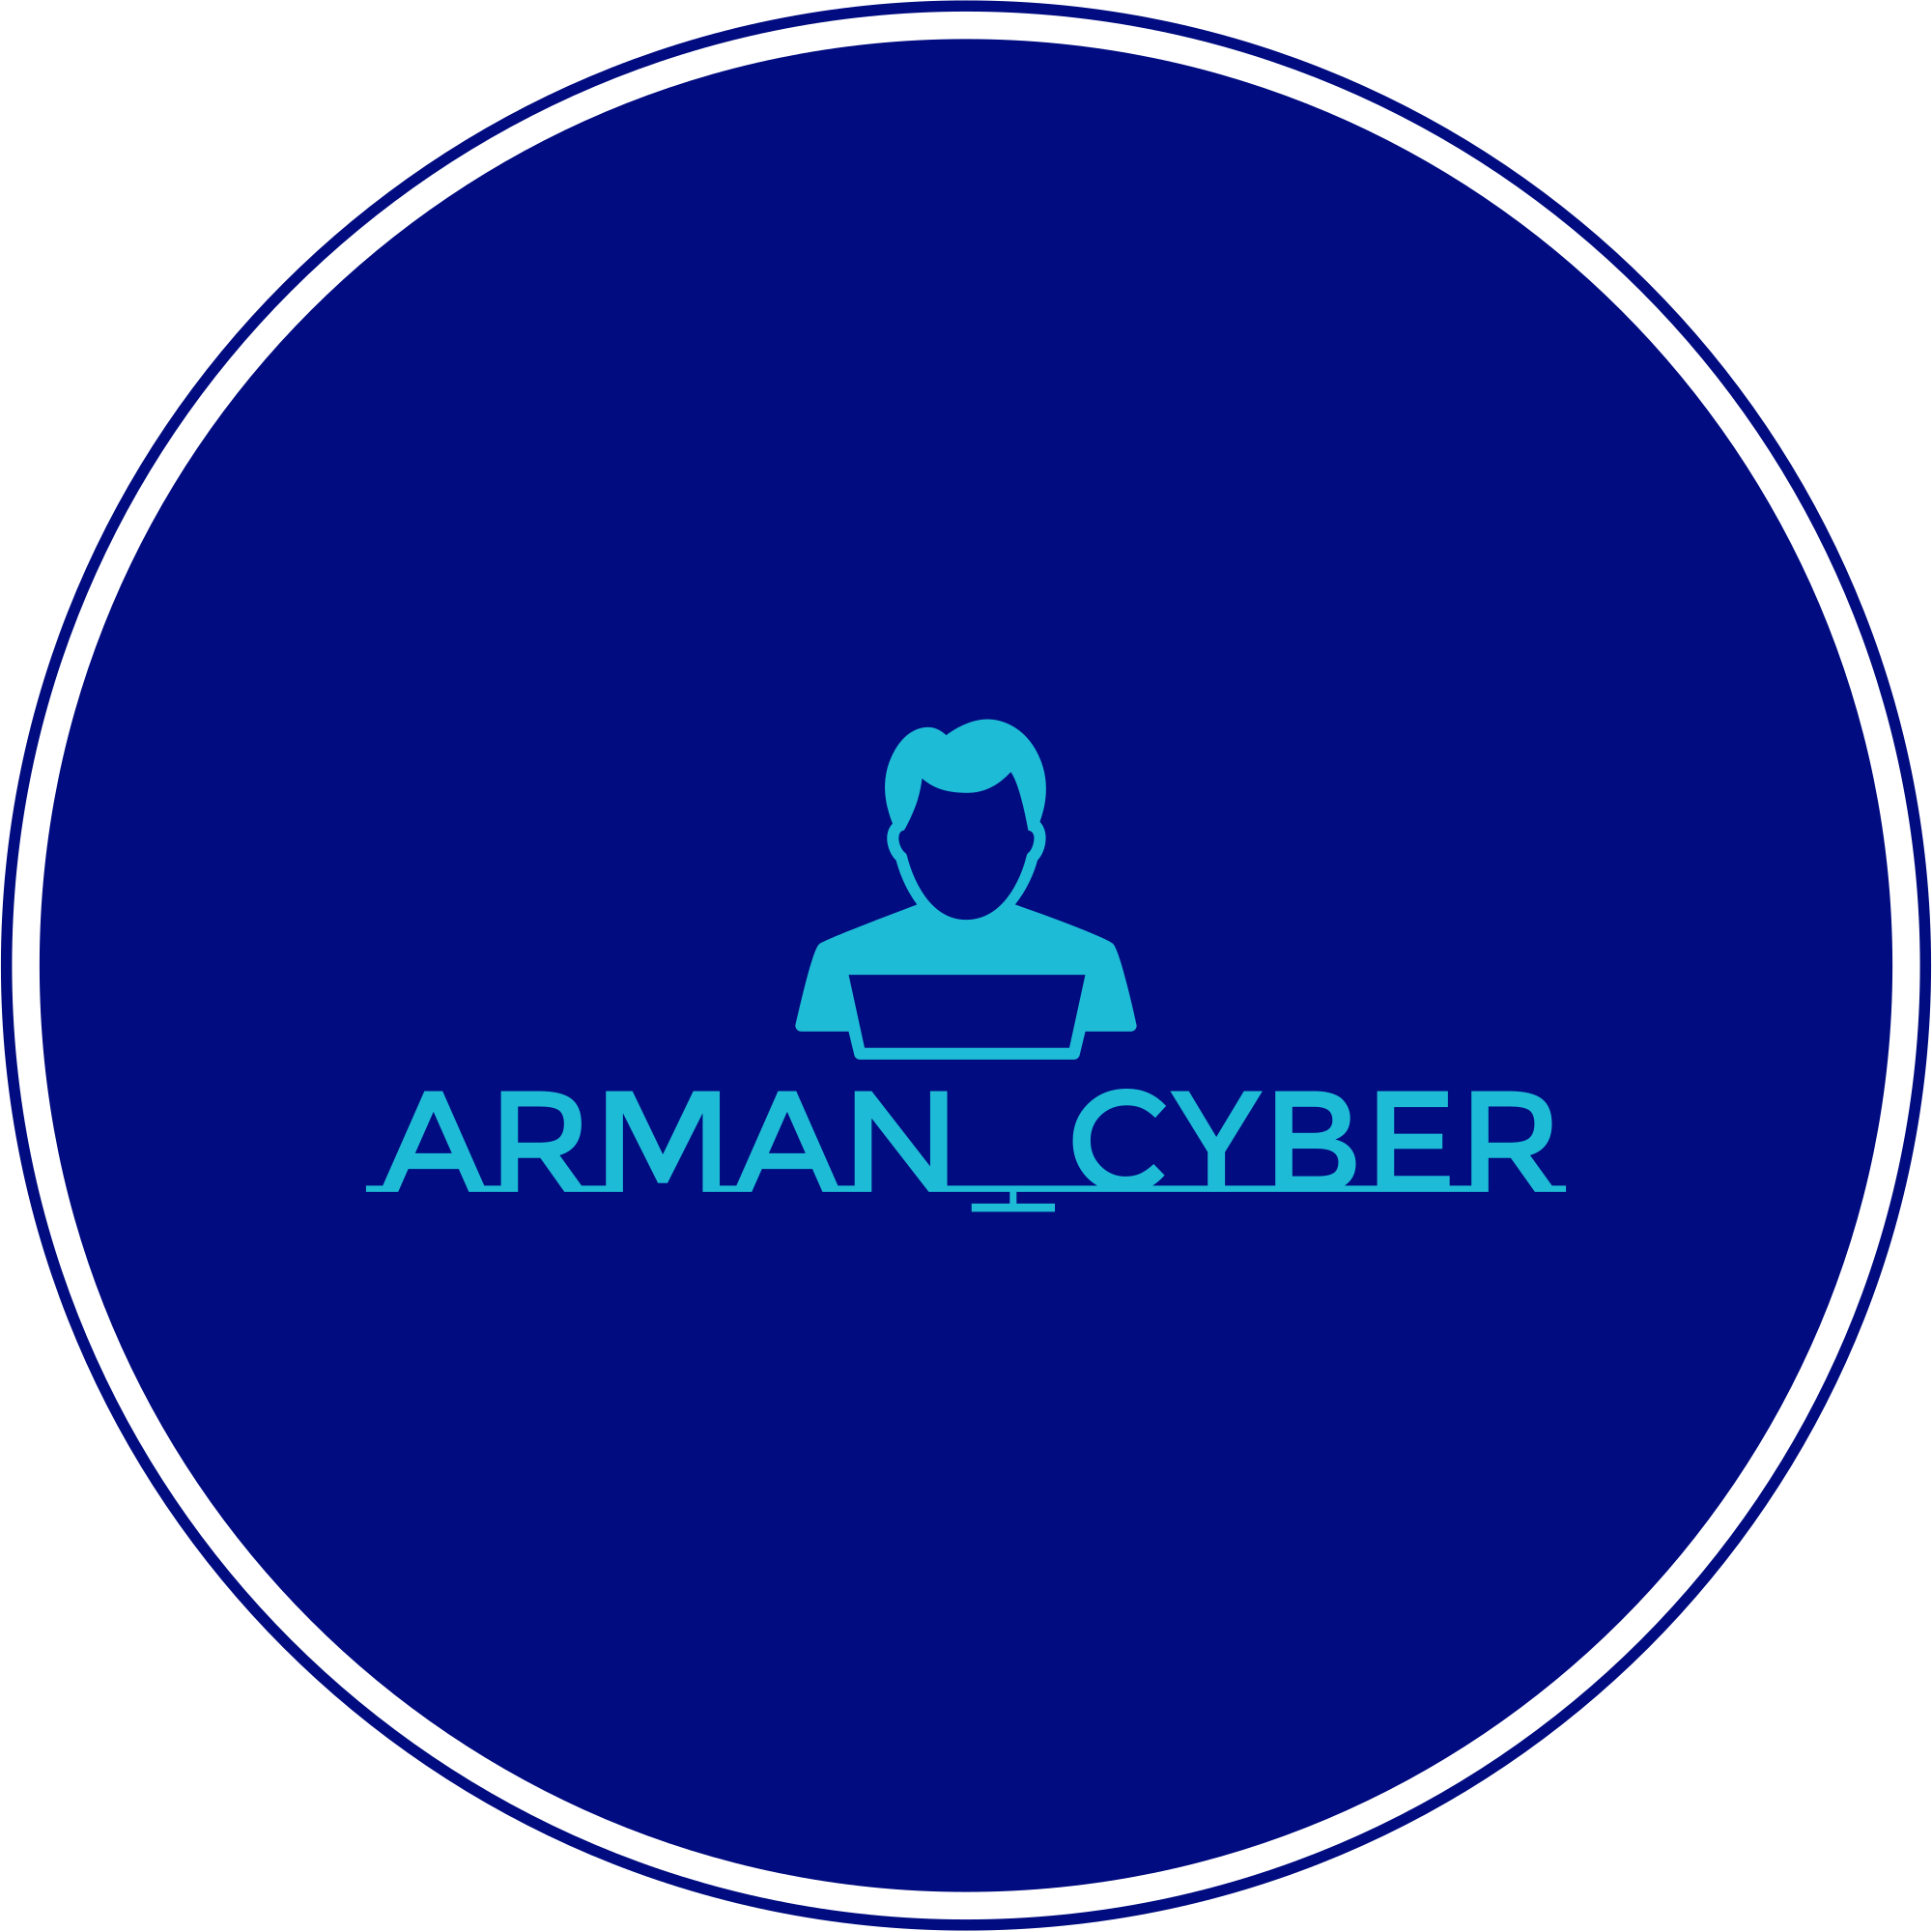 Arman Cyber